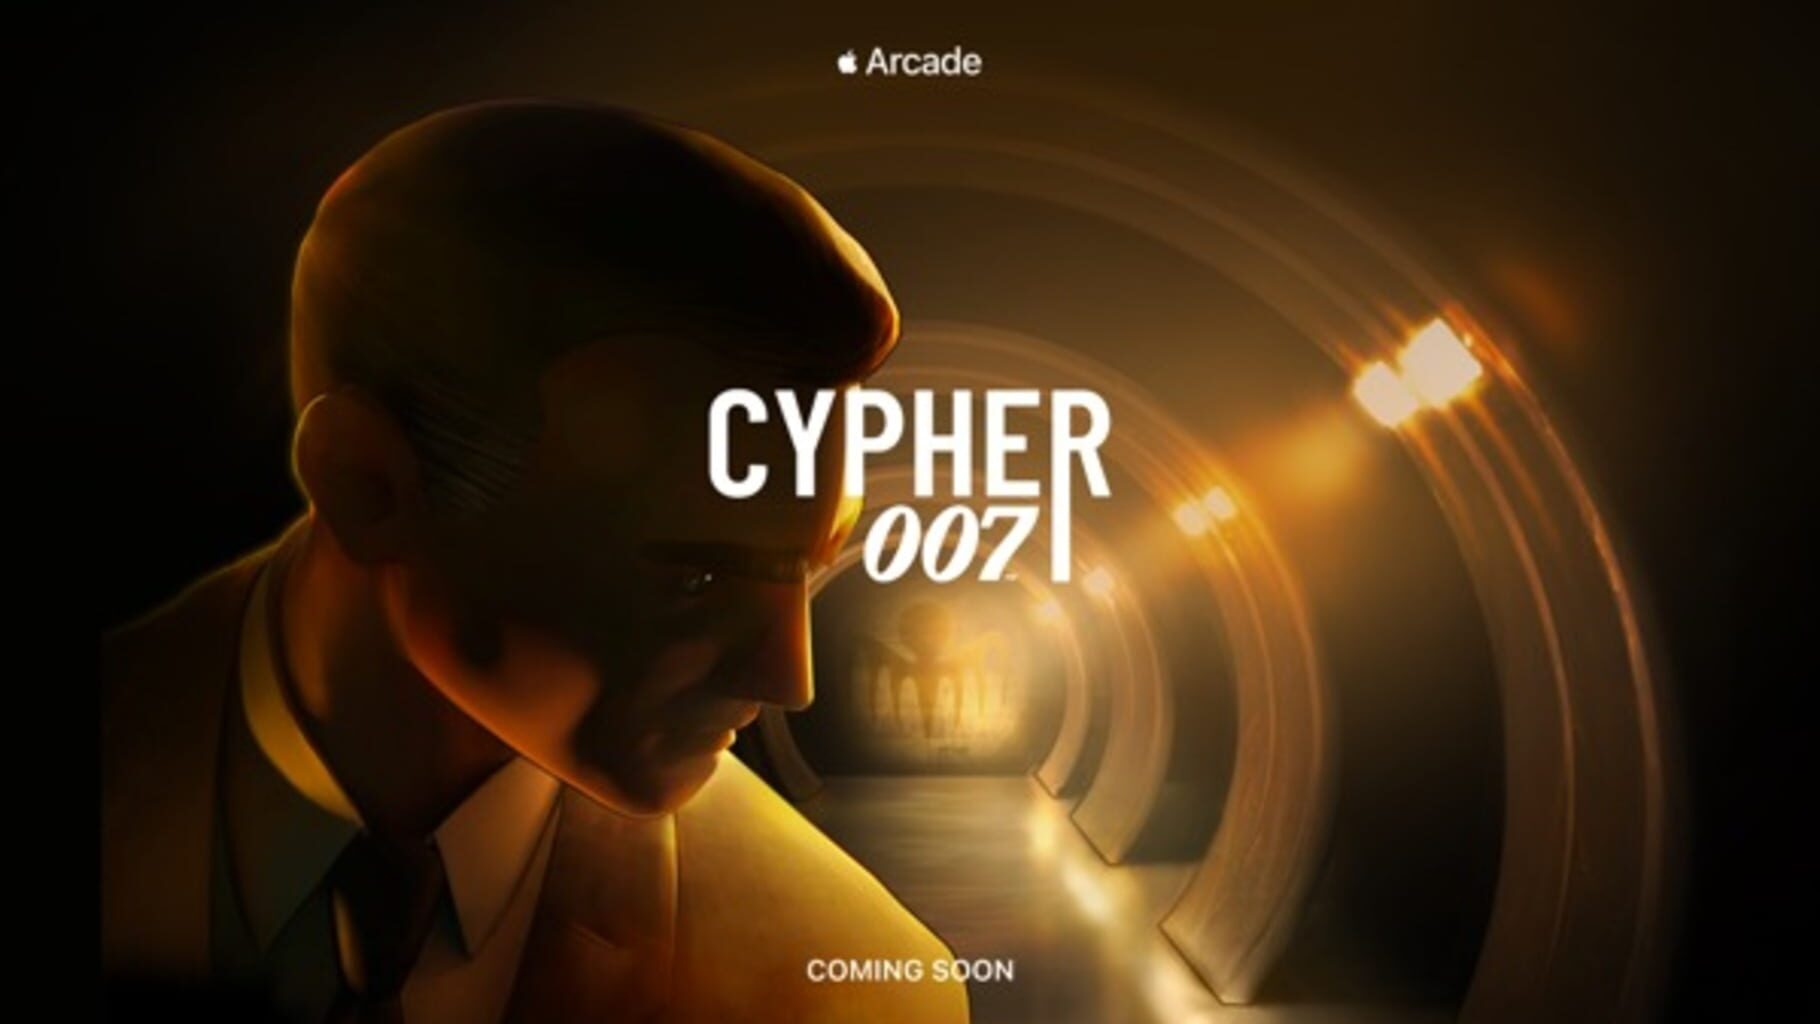 Arte - Cypher 007